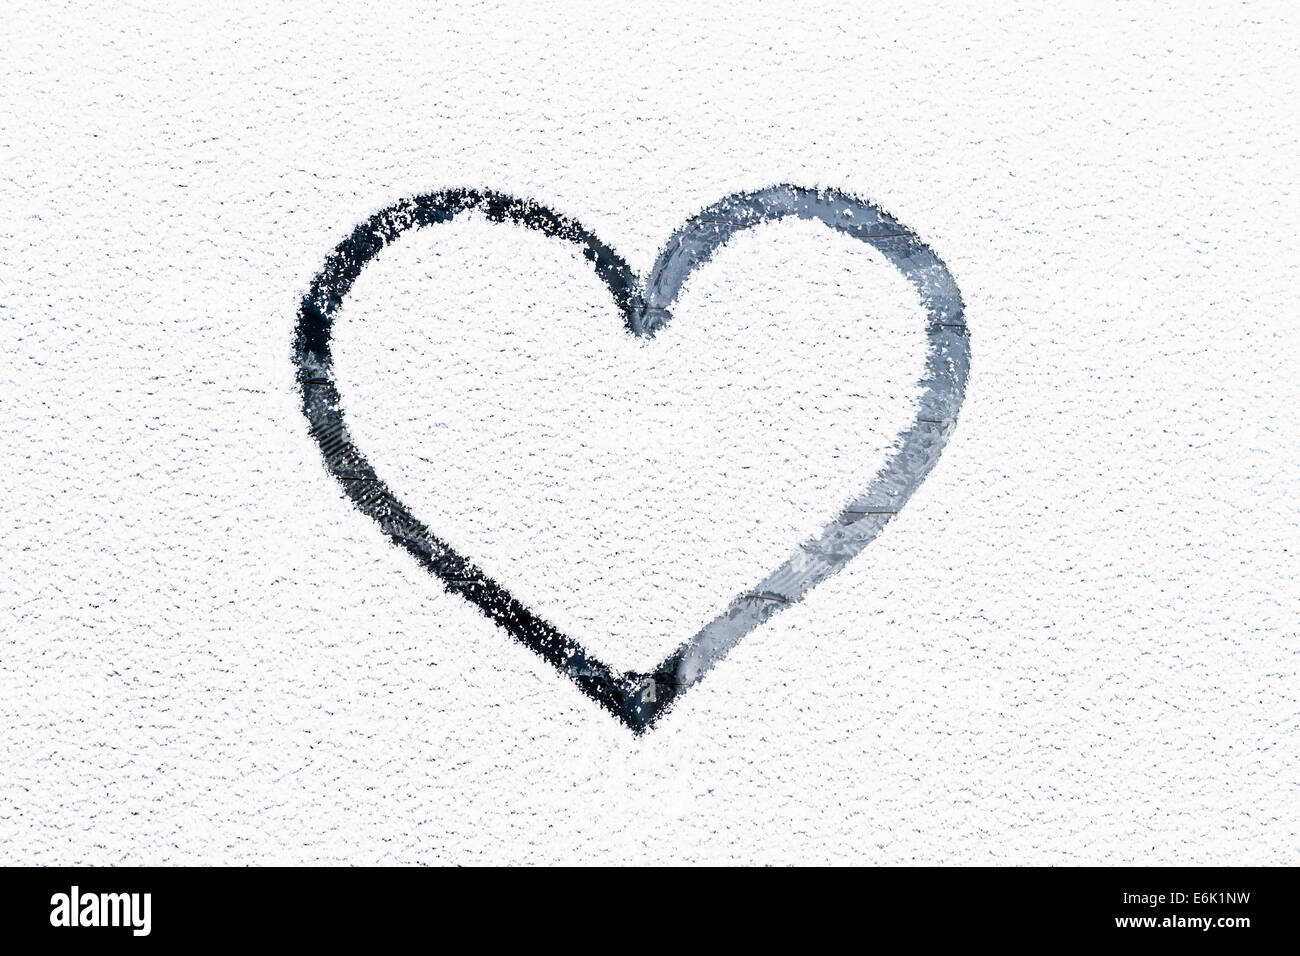 Heart drawn on frosty window. Stock Photo